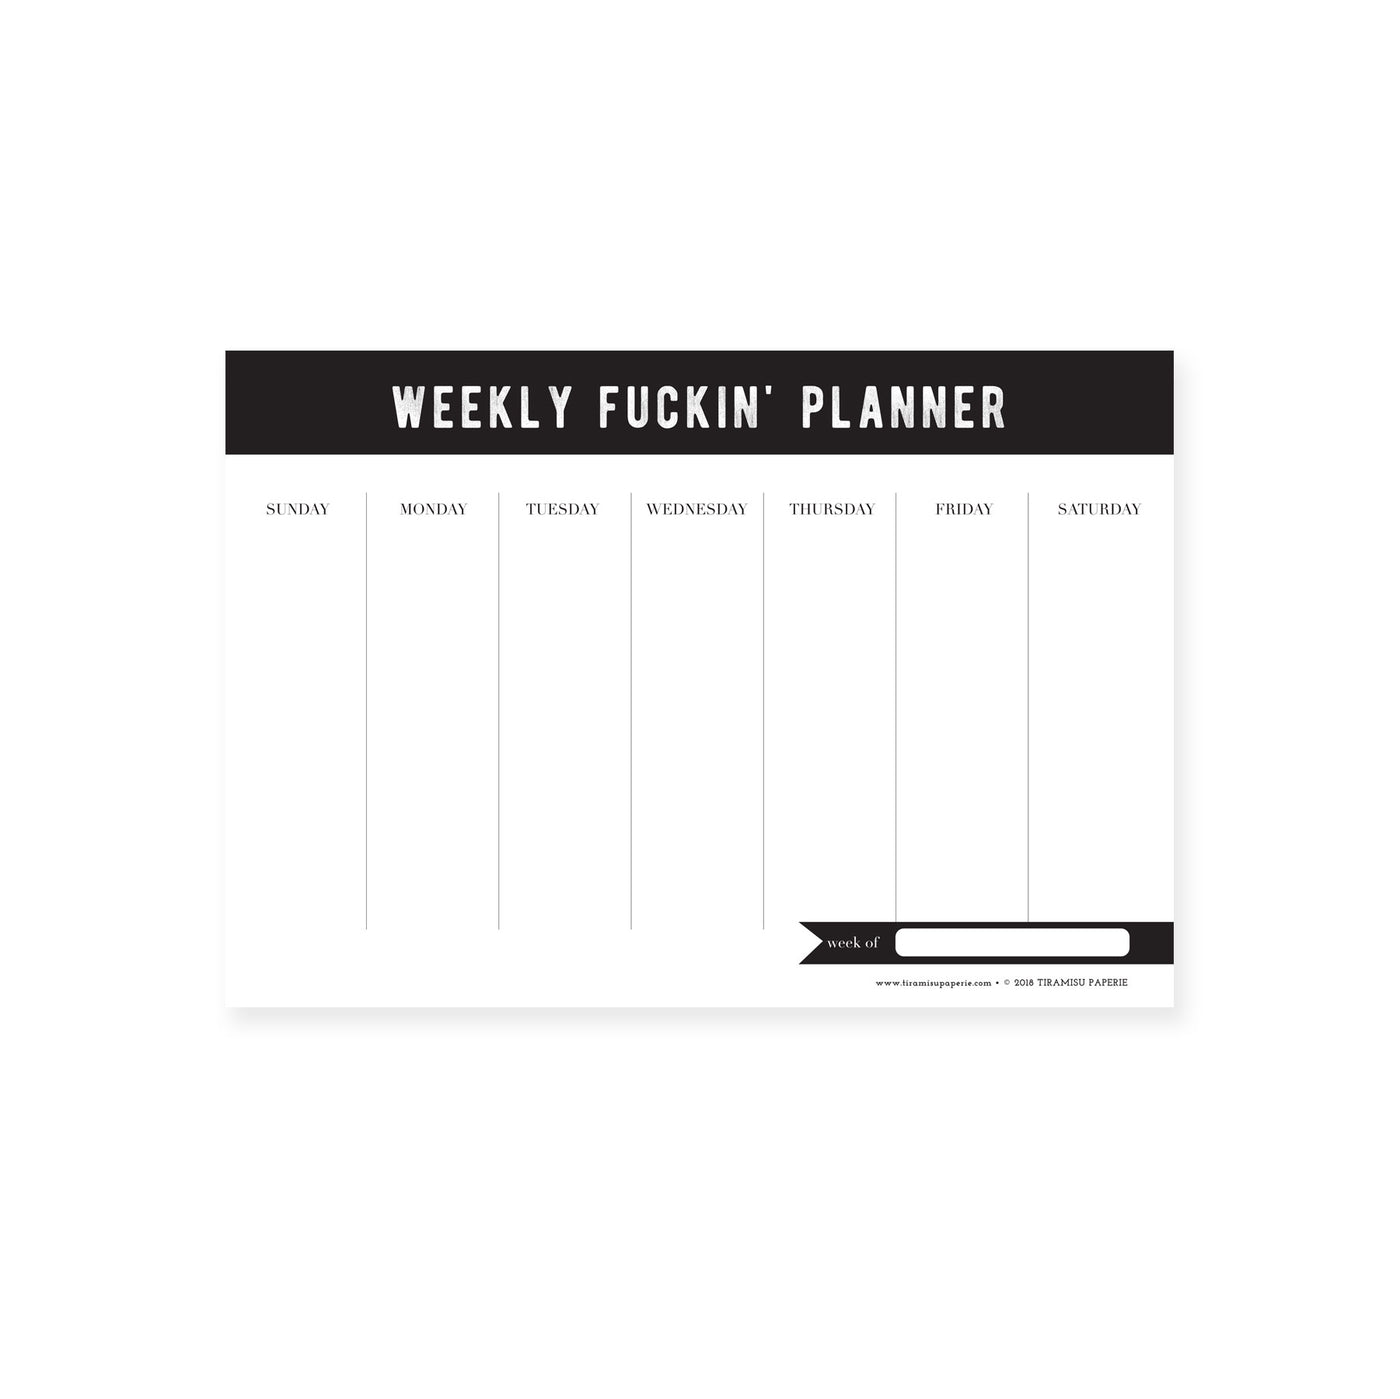 Weekly Fuckin' Planner Mousepad Notepad